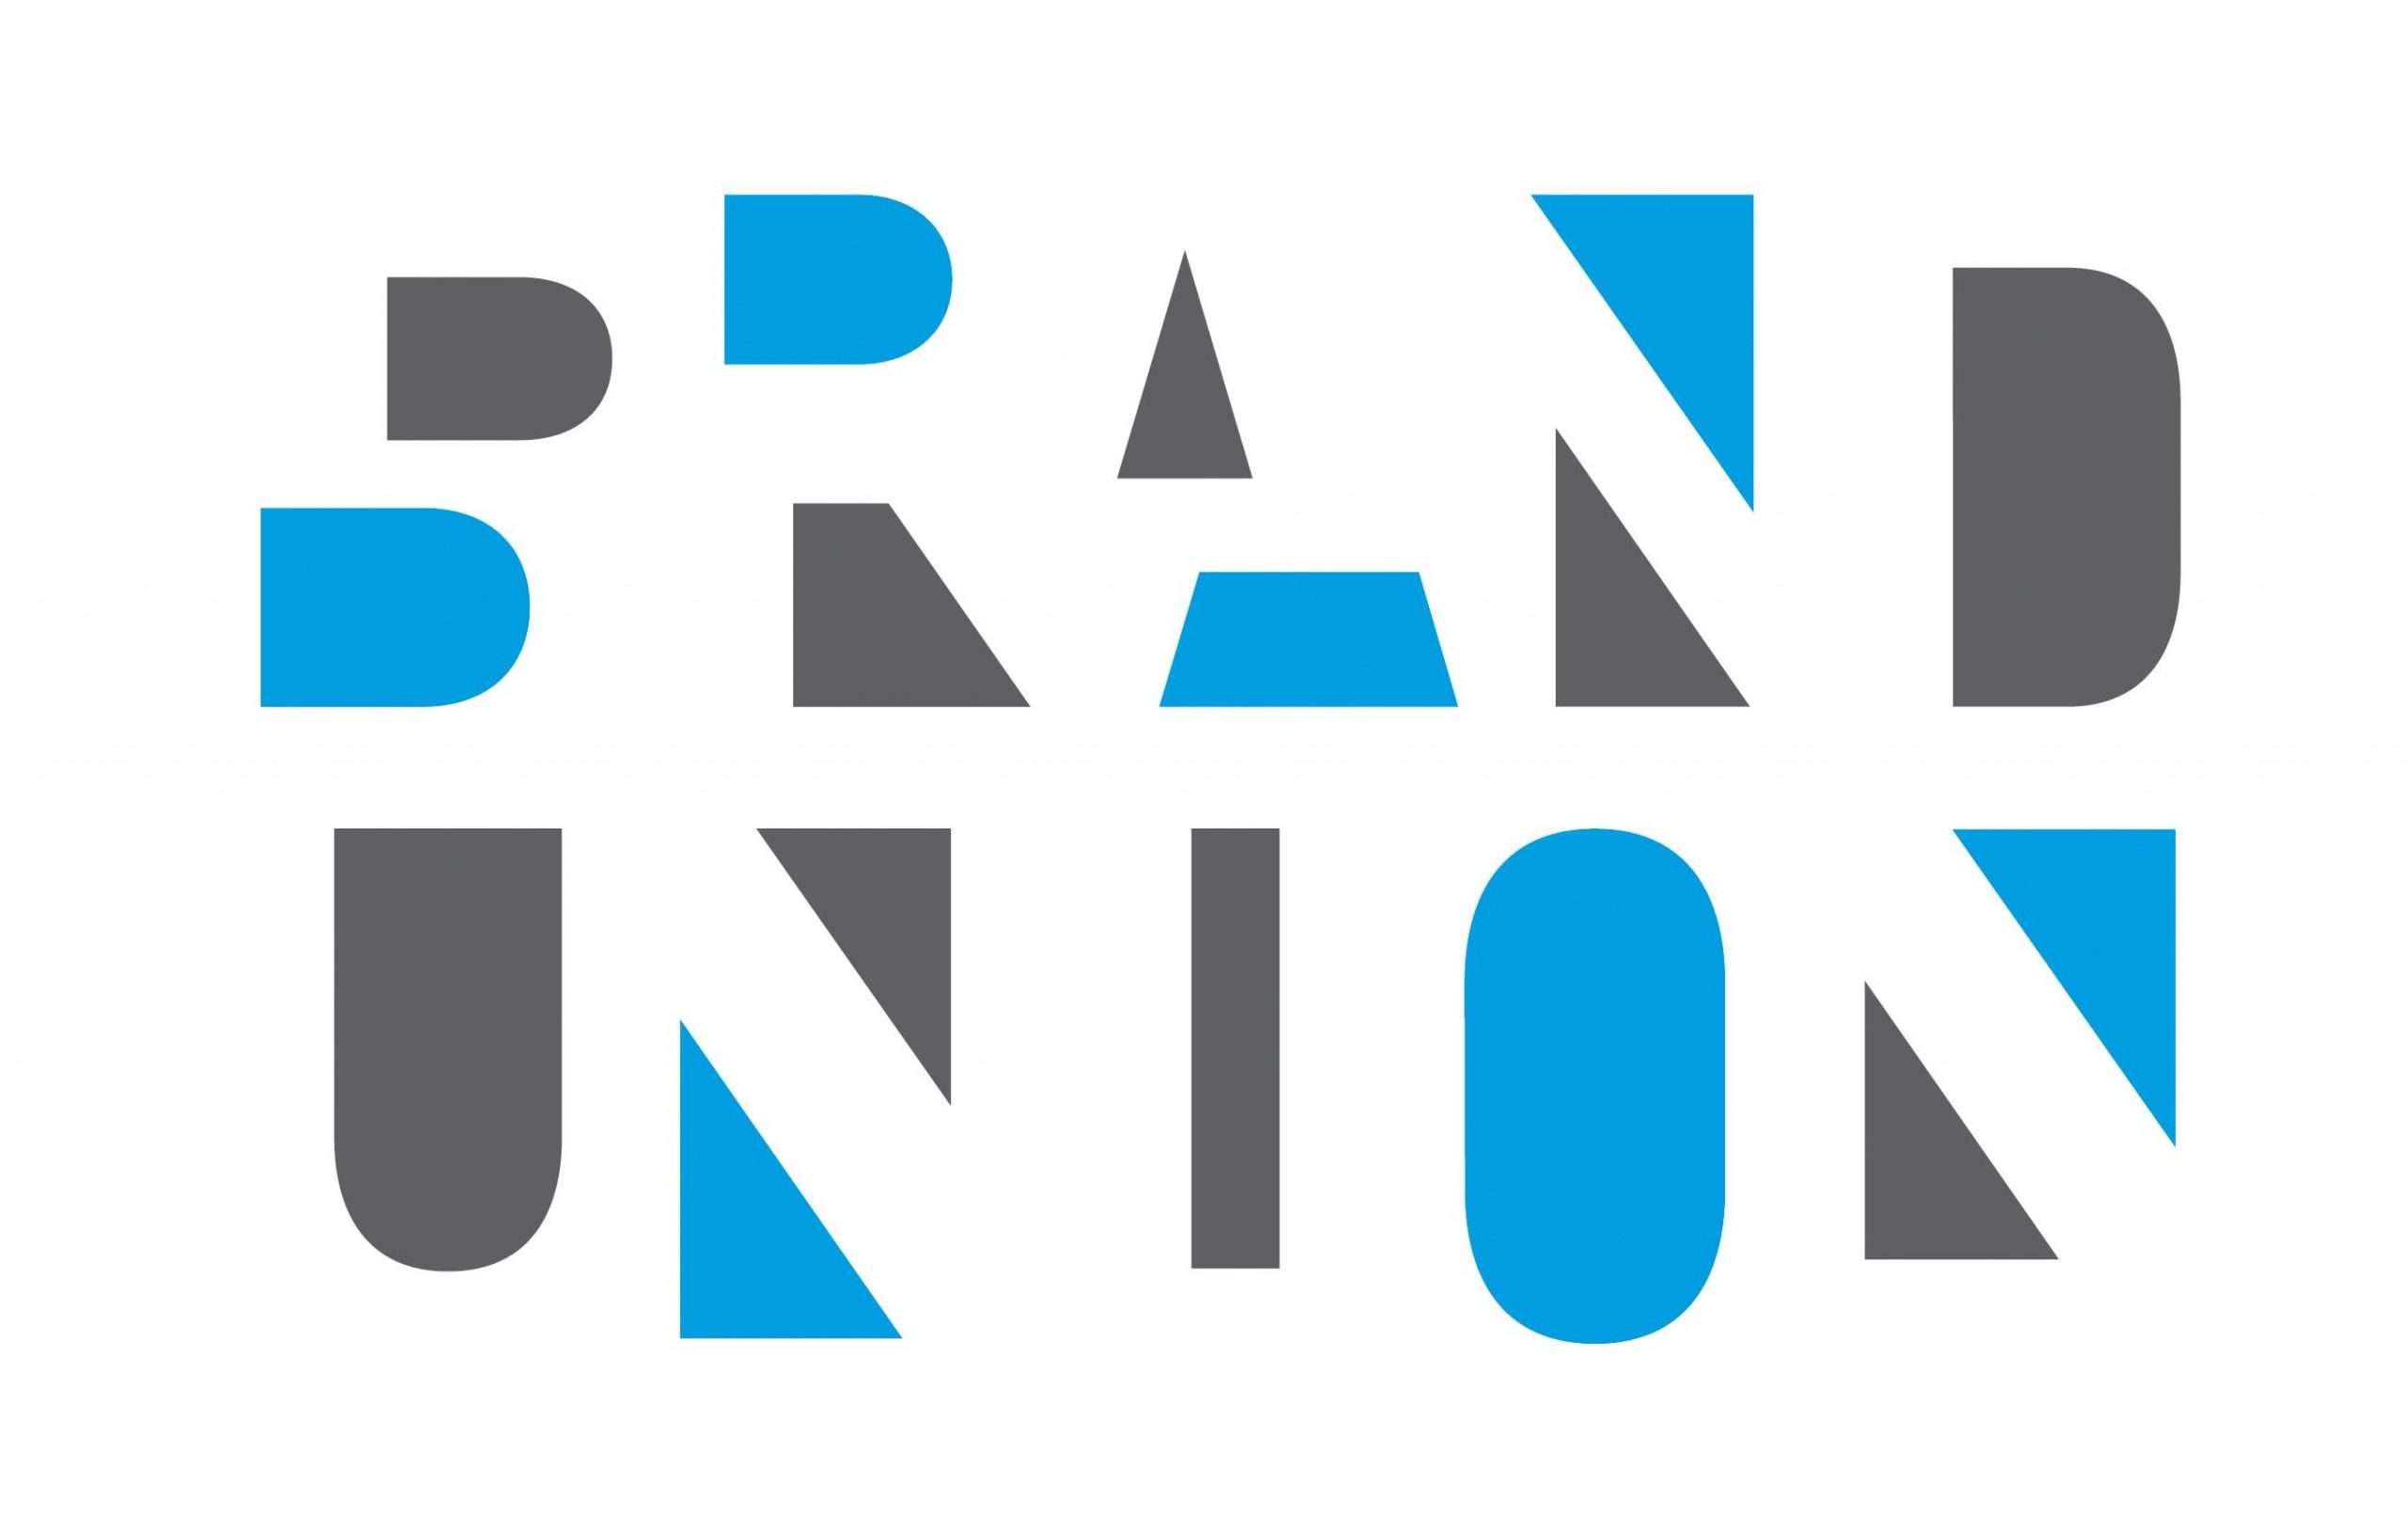 The Brand Union